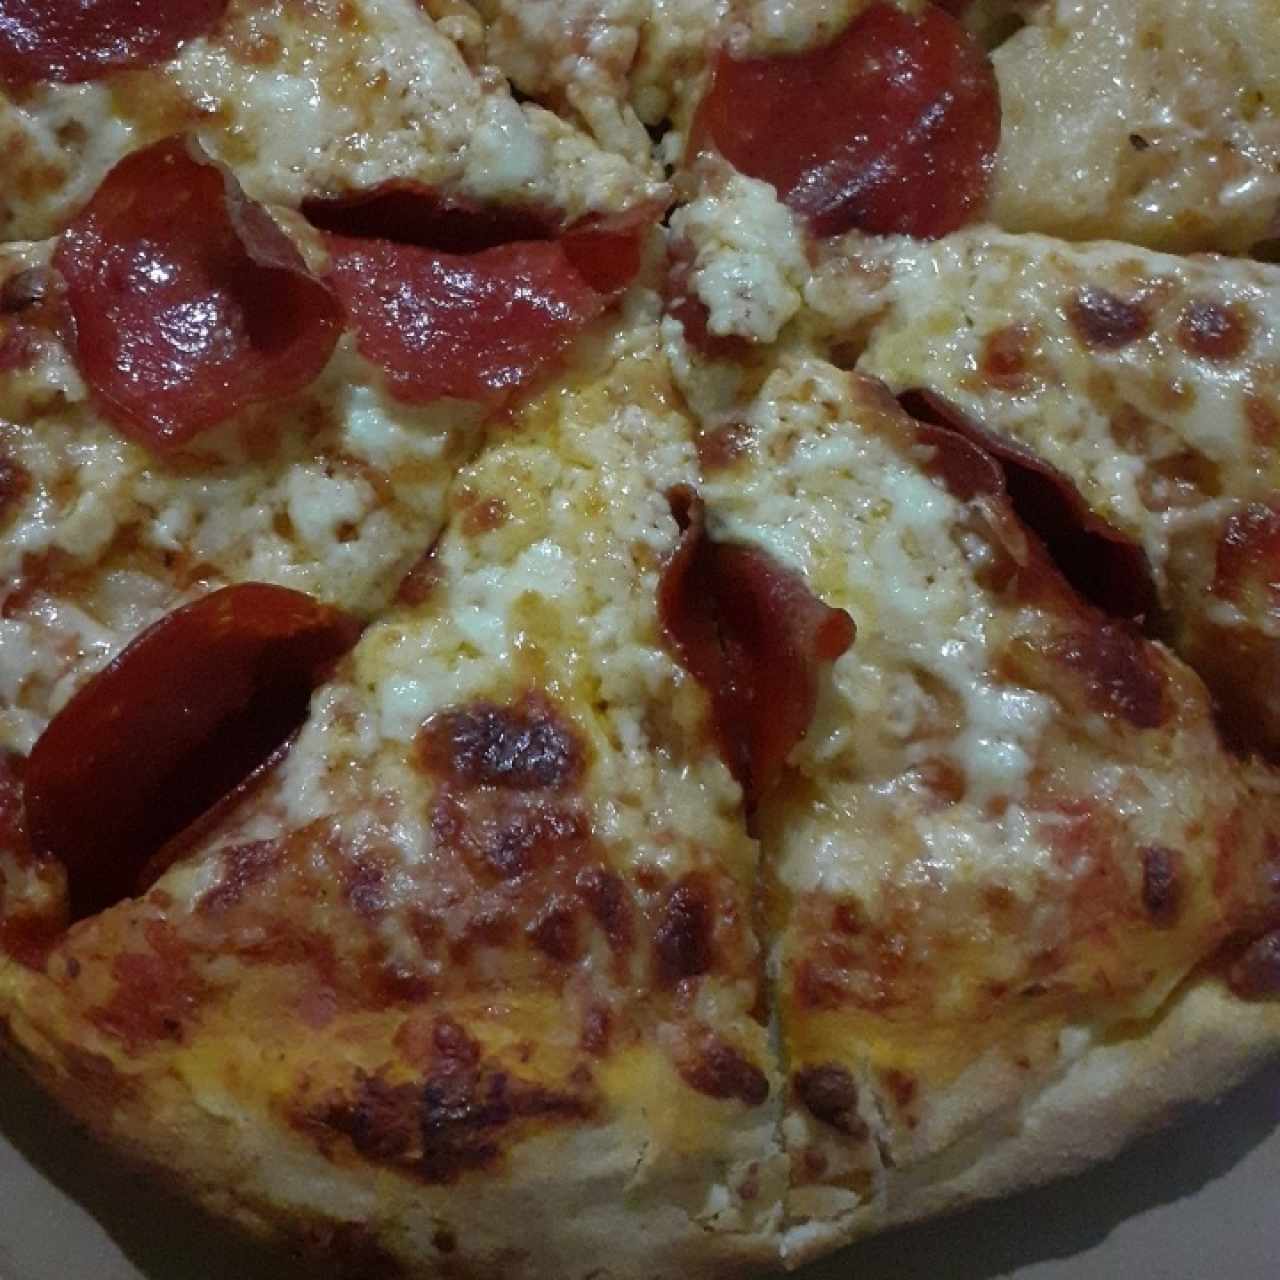 Pizza individualmente un solo ingrediente, de peperoni.